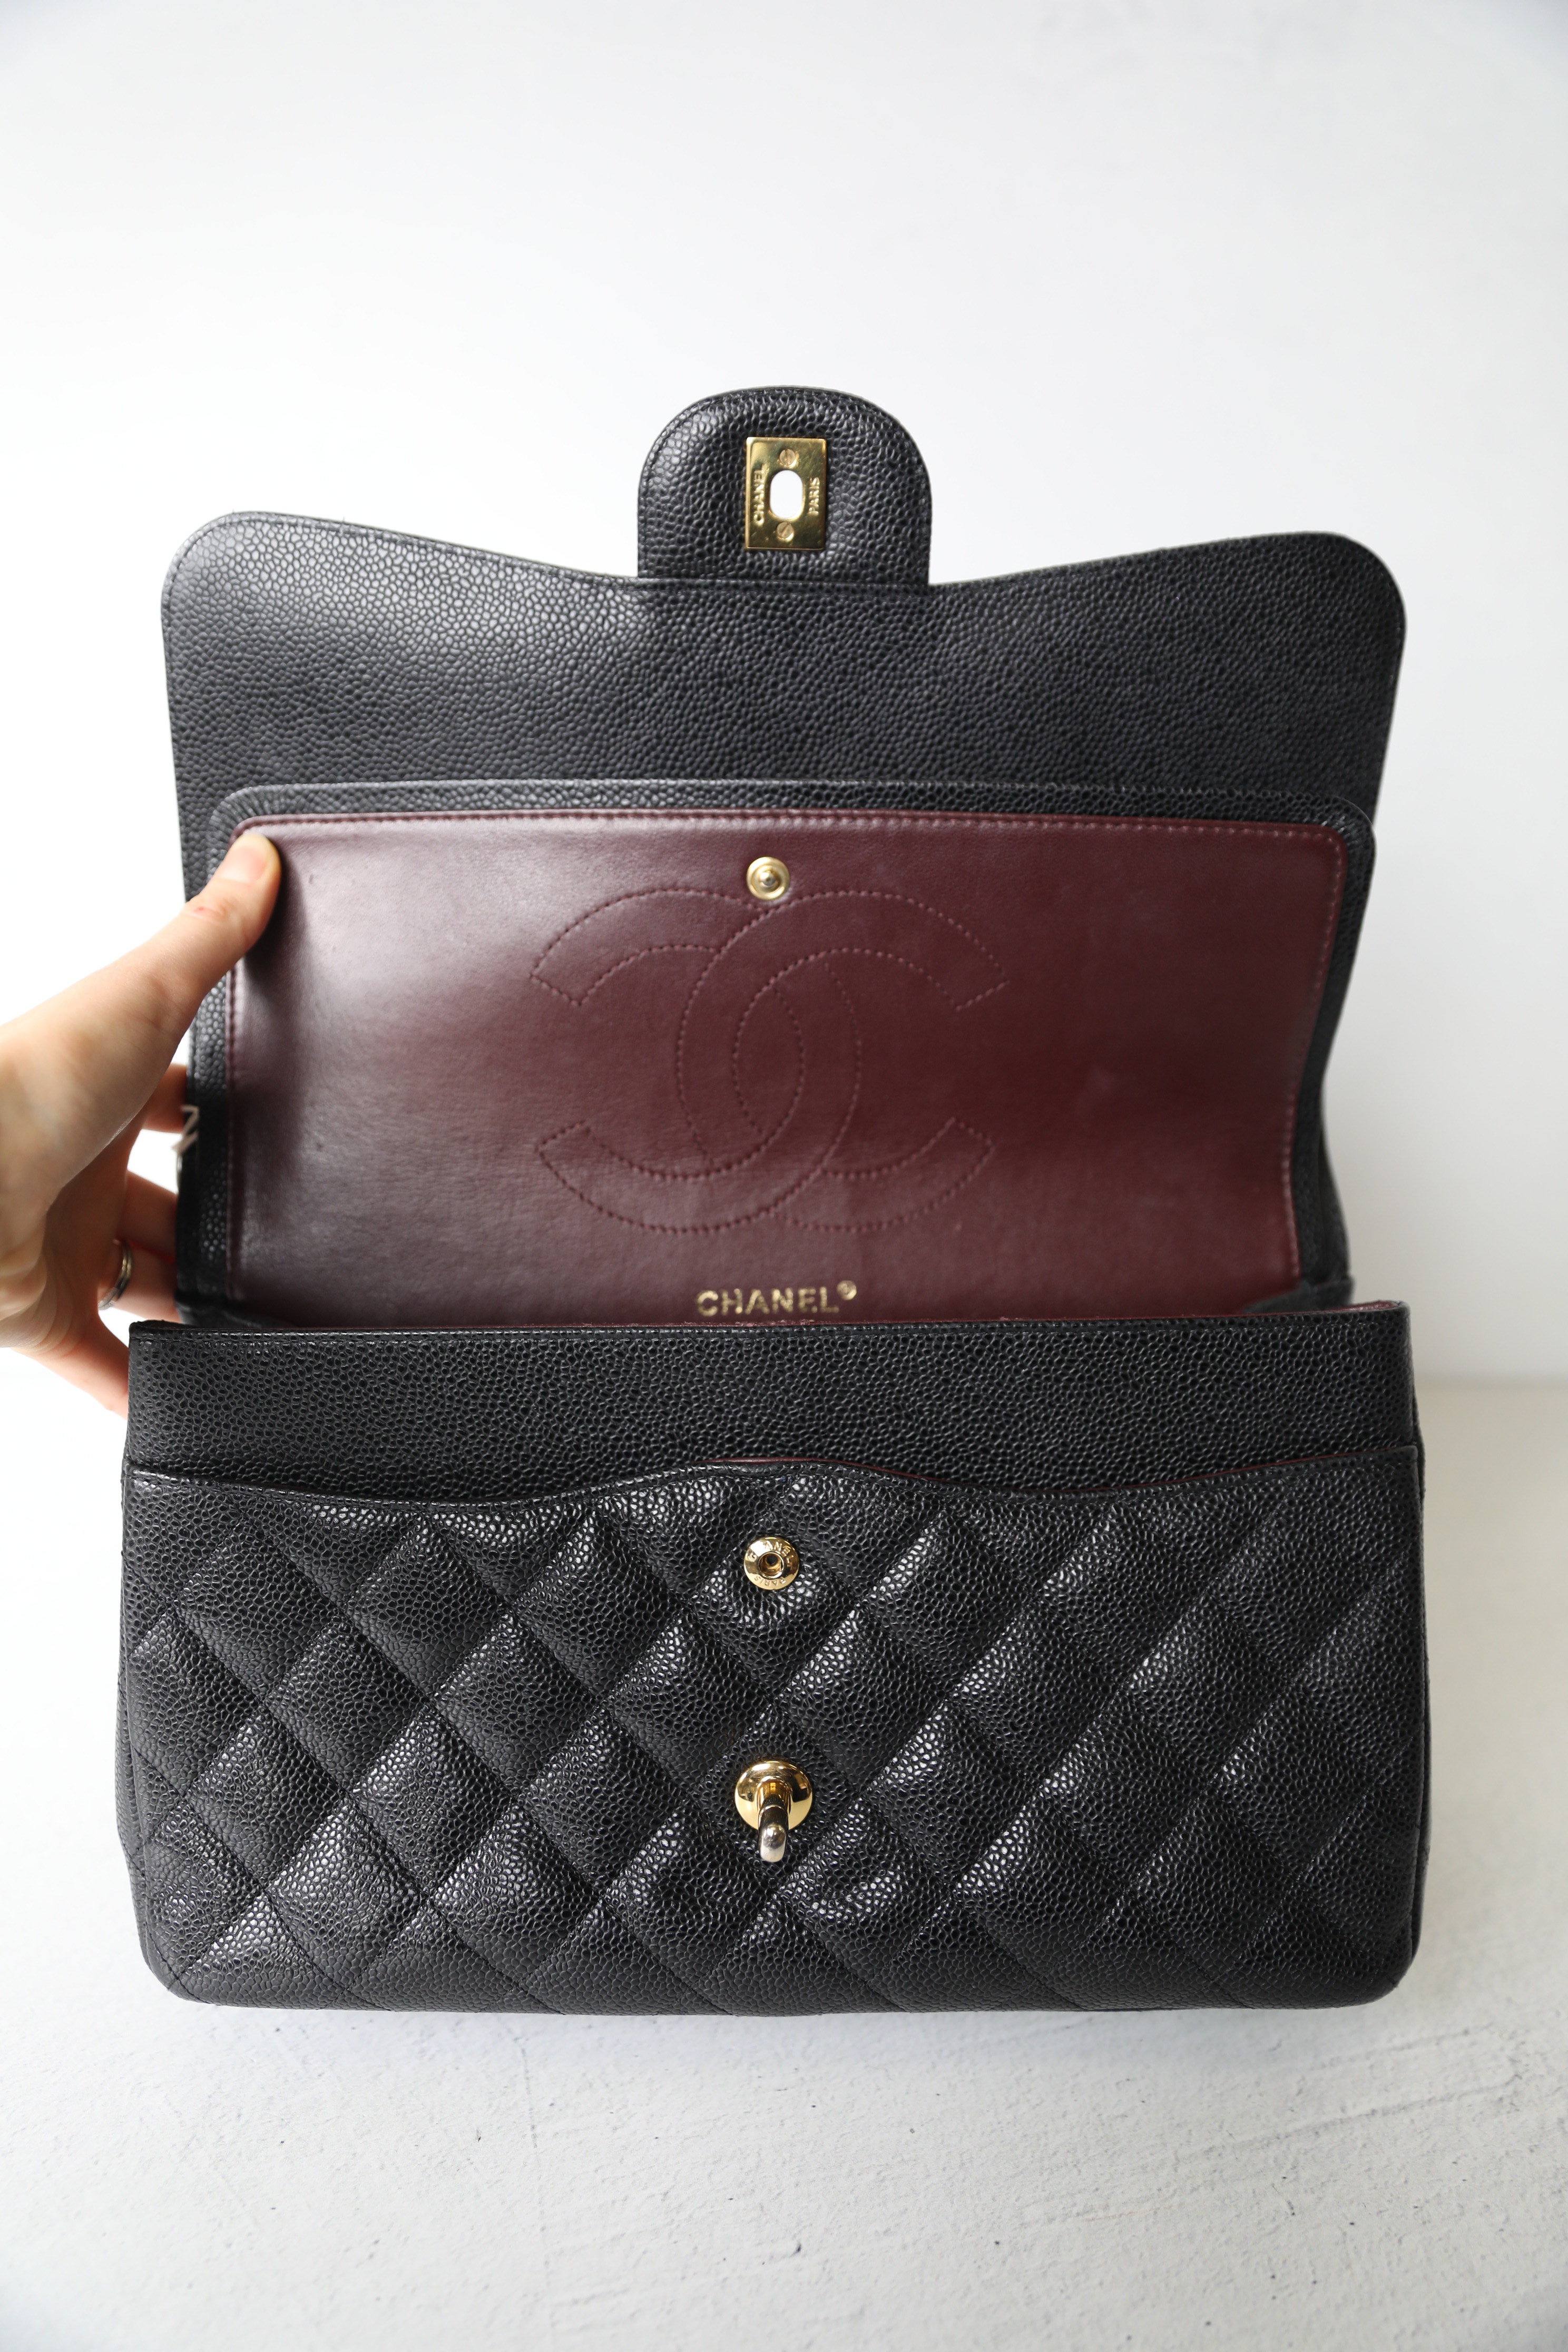 chanel classic handbag lambskin black leather